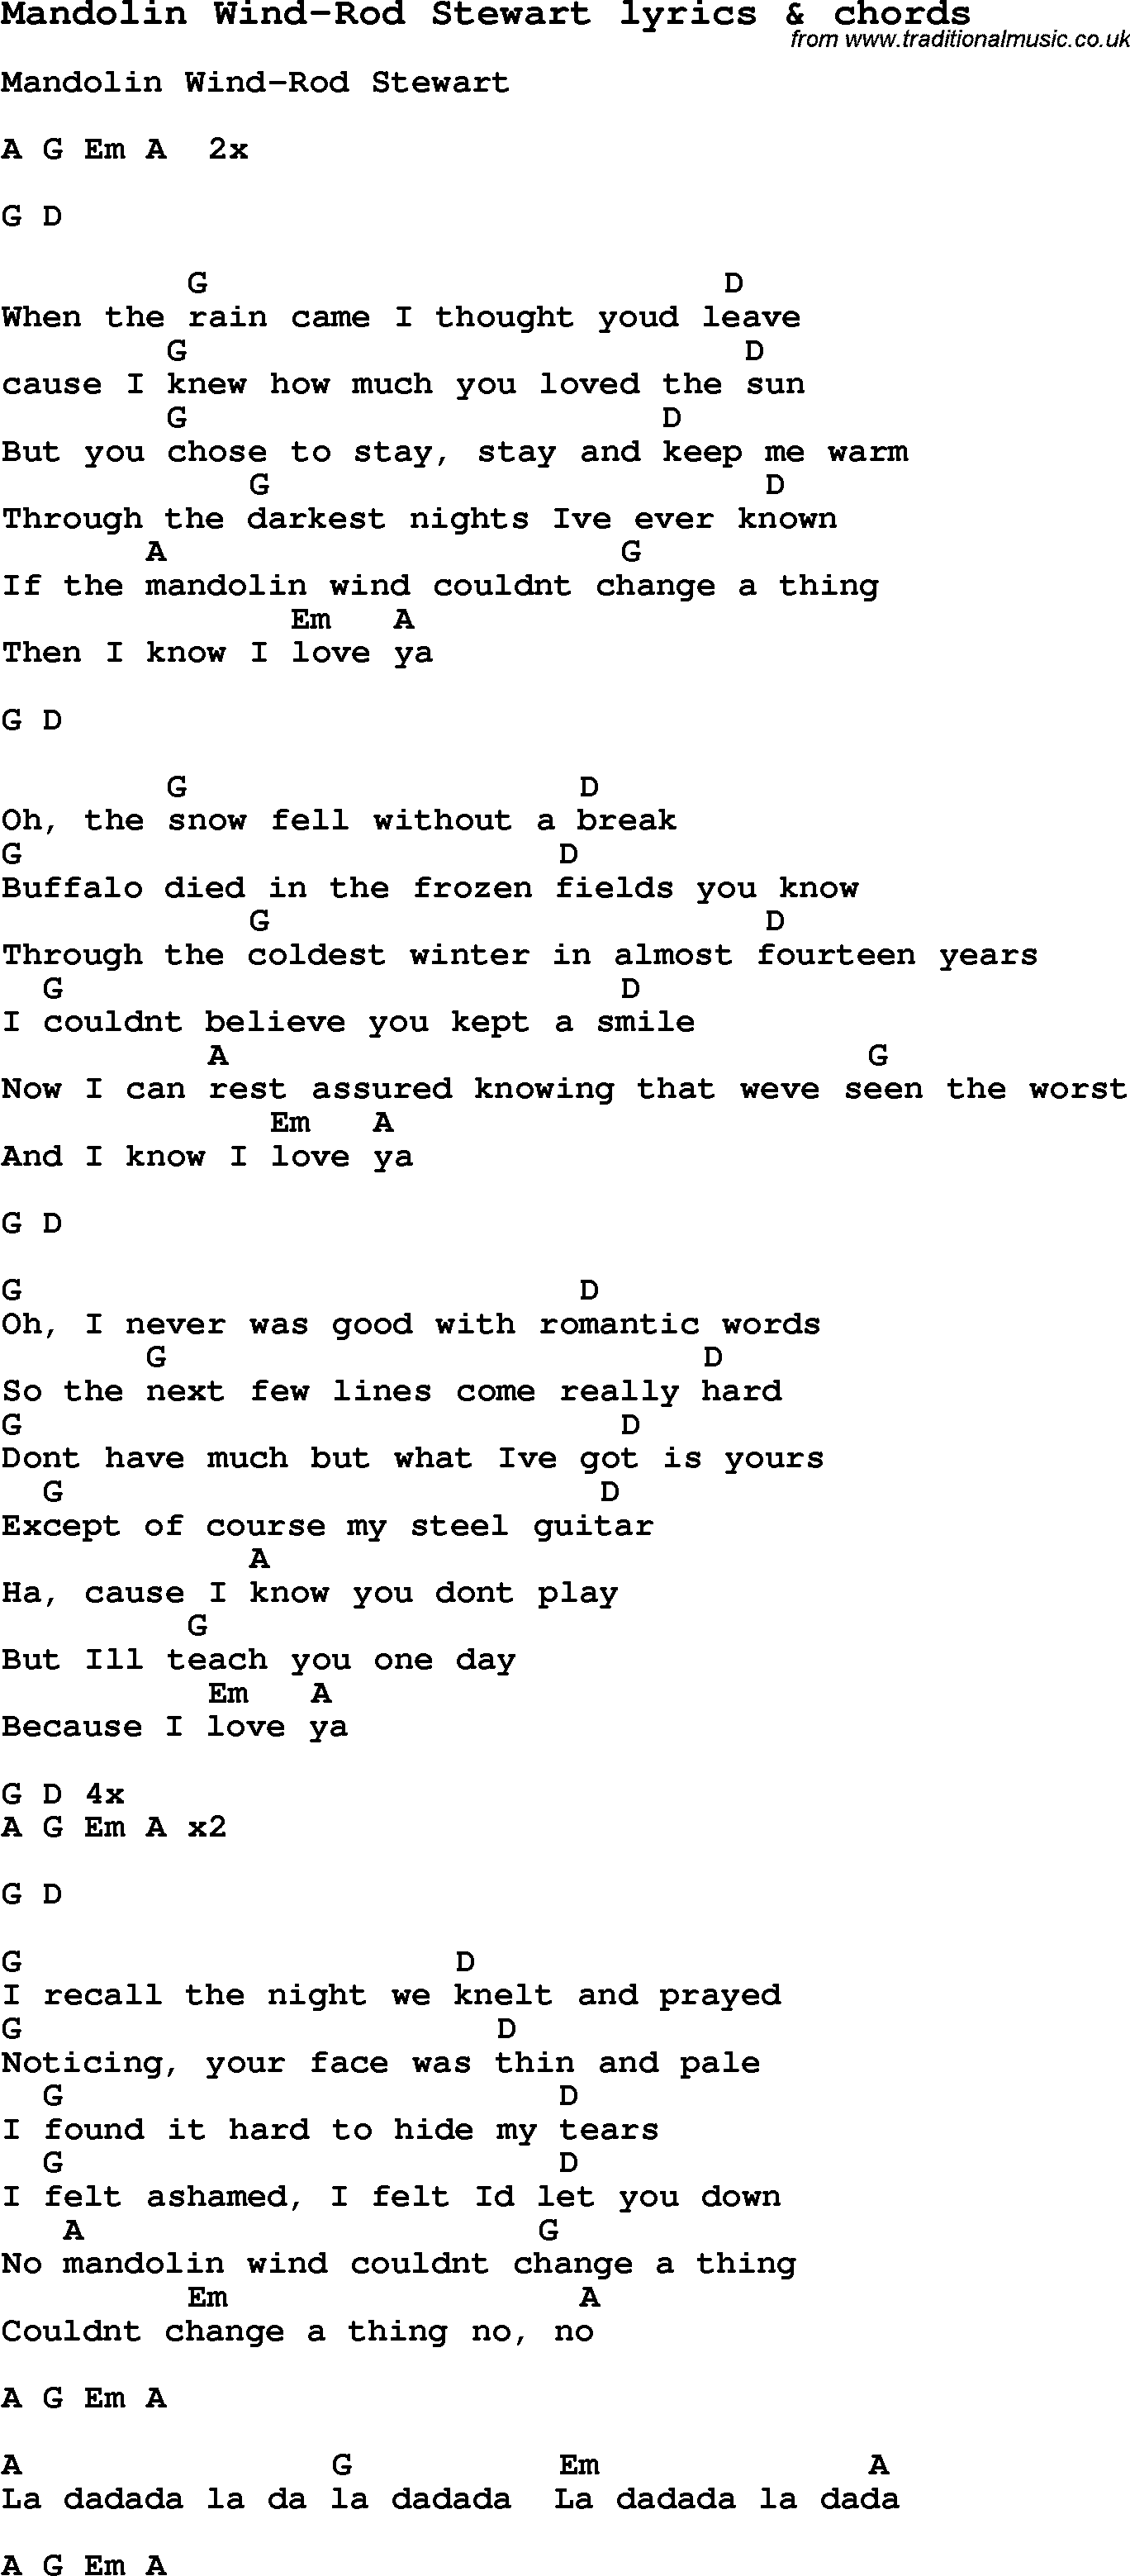 Love Song Lyrics for: Mandolin Wind-Rod Stewart with chords for Ukulele, Guitar Banjo etc.